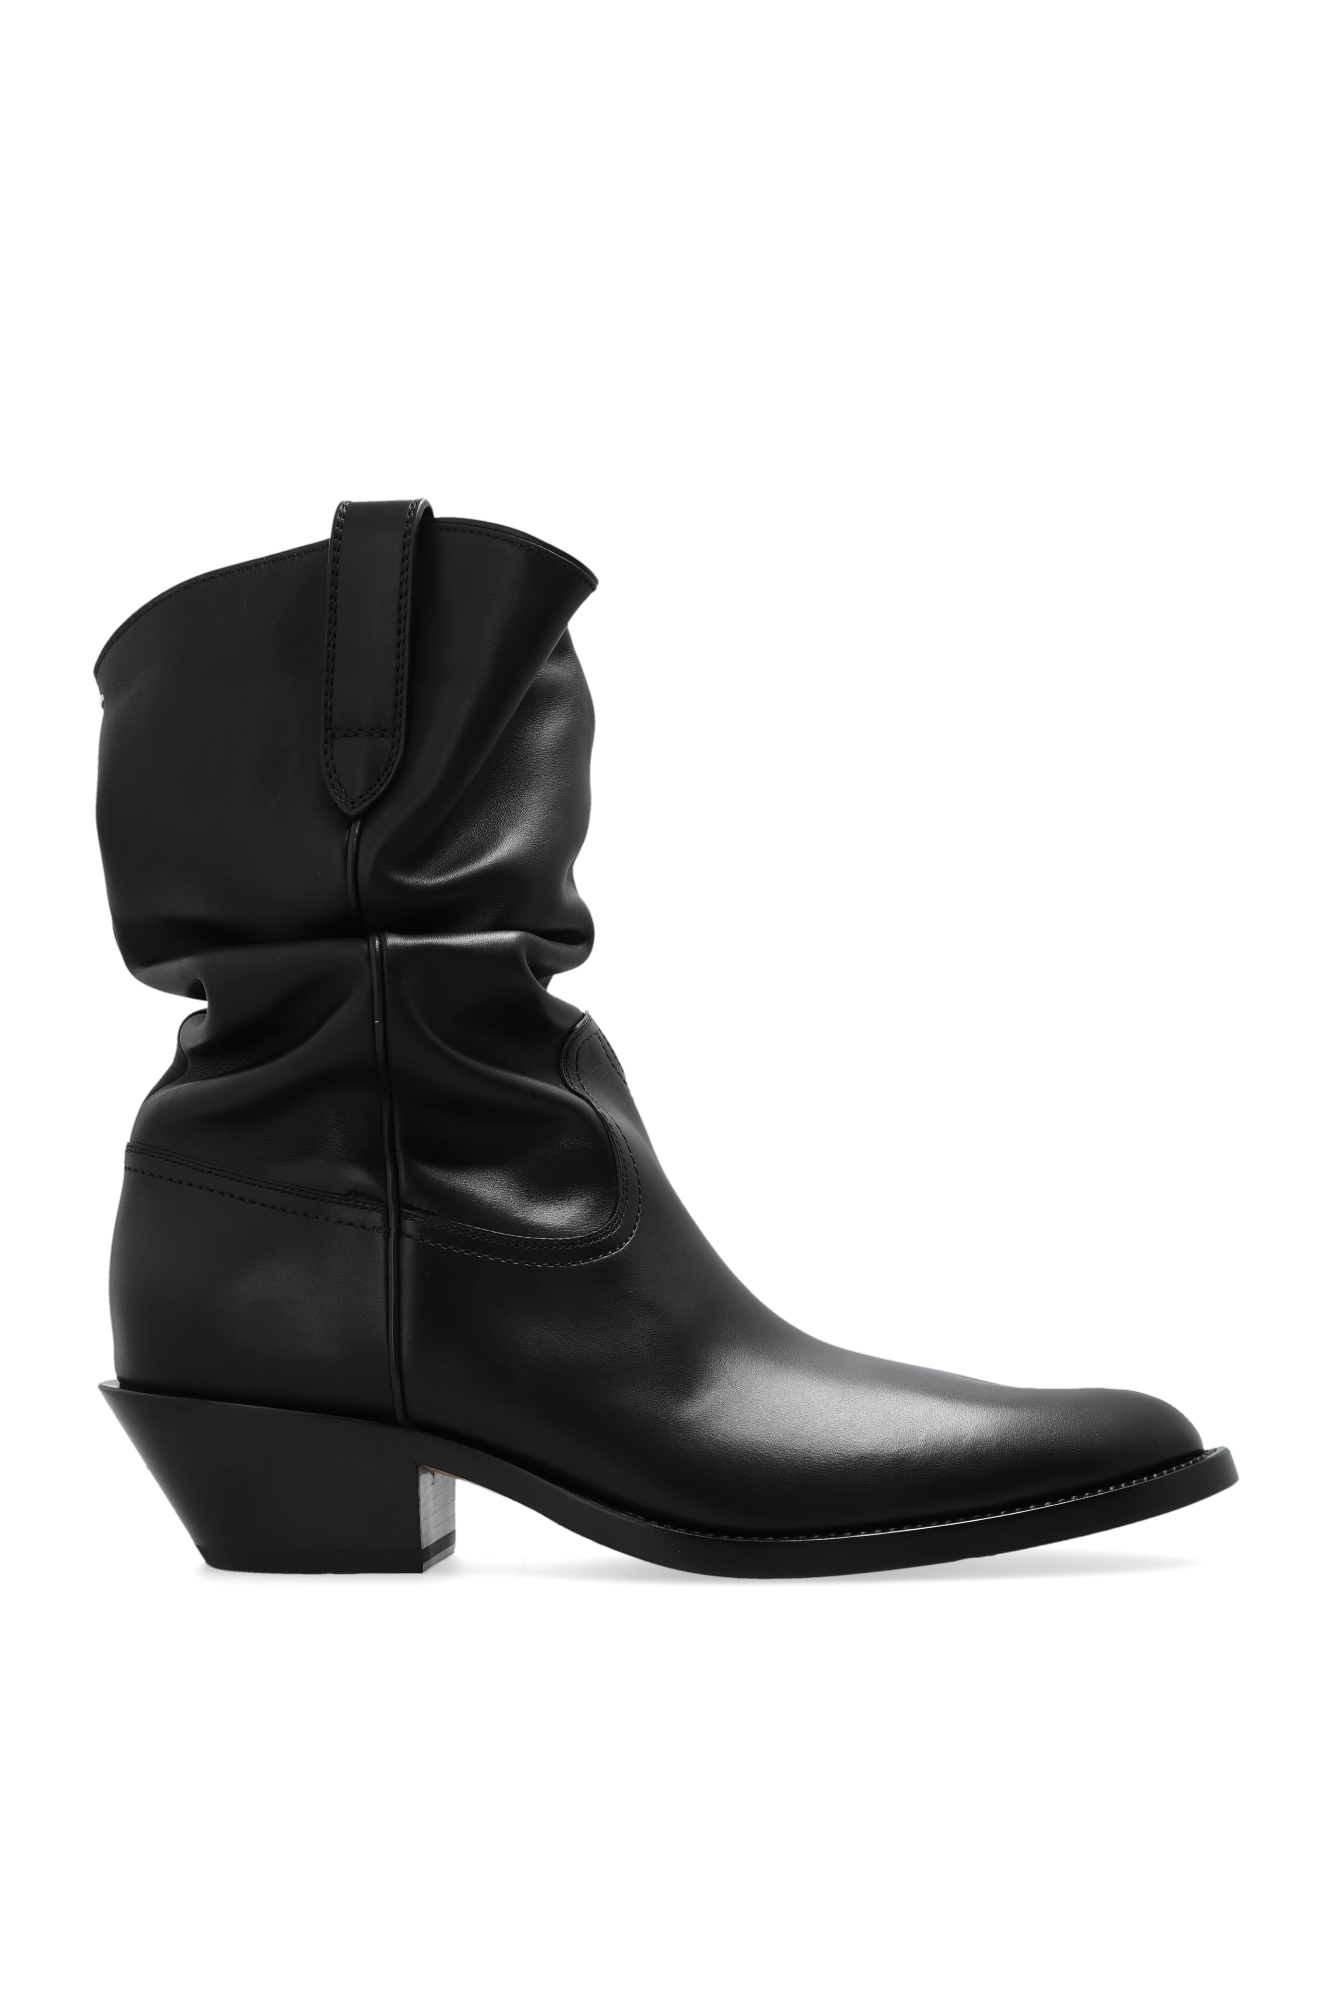 Black ‘Tabi’ cowboy boots Maison Margiela - Vitkac Germany